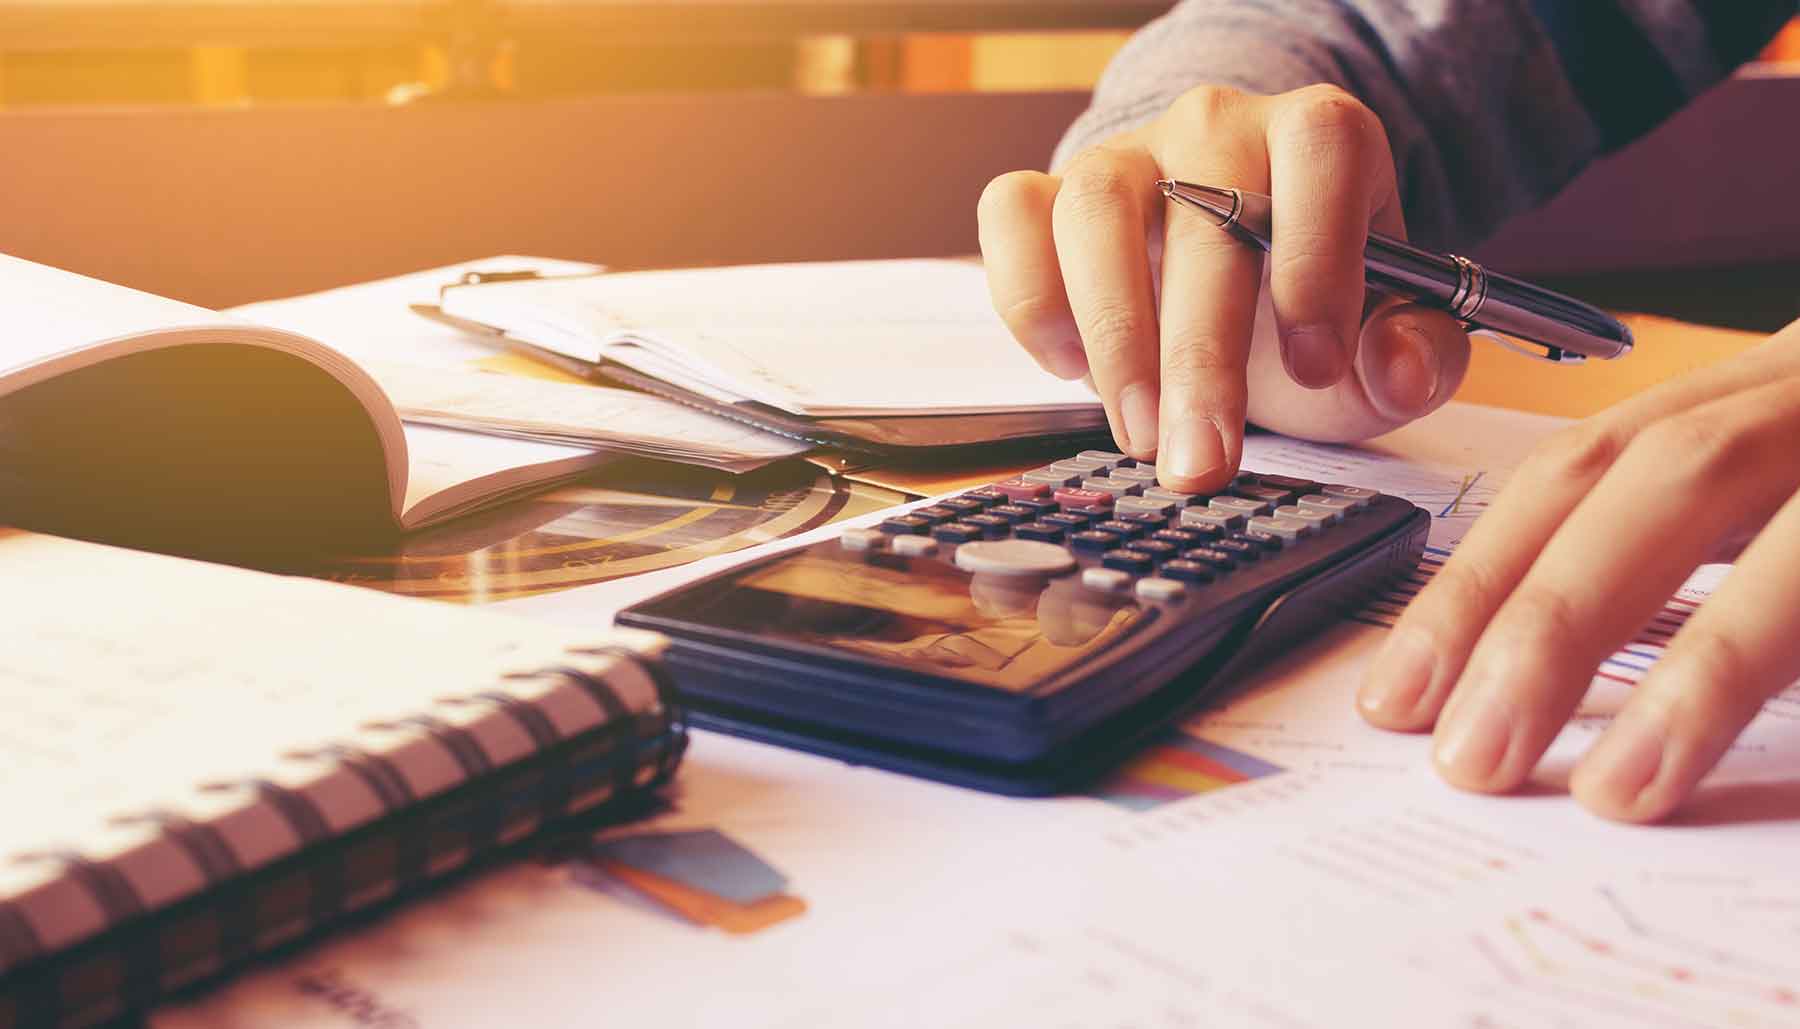 saving money, budgeting concept. using a calculator